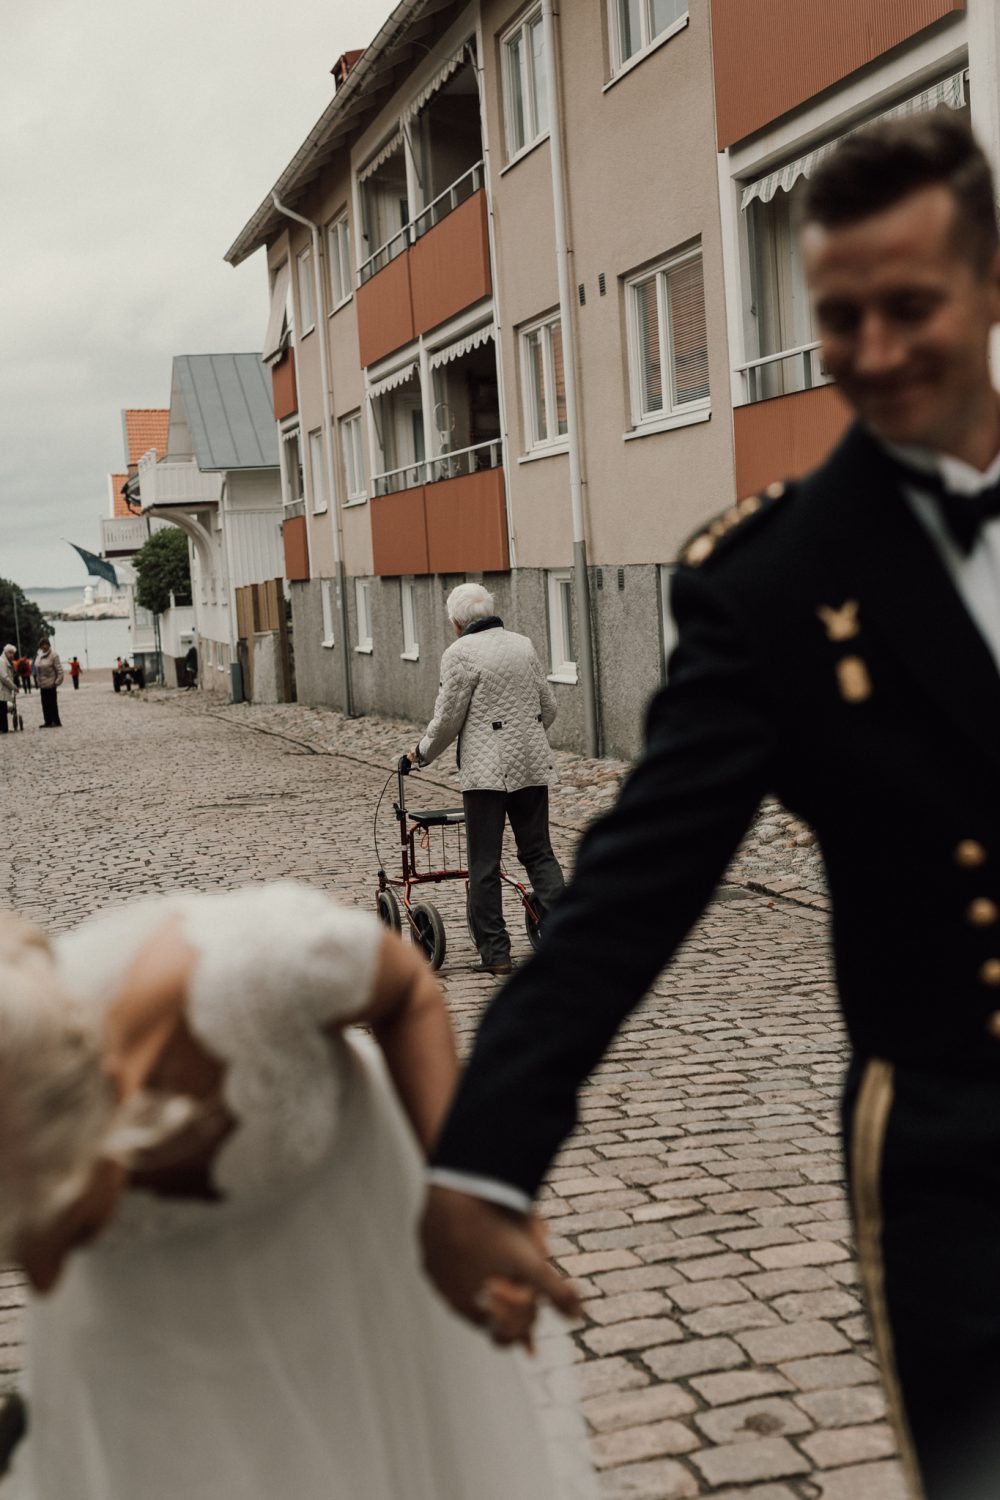 bröllop ale, Bröllop göteborg, bröllop grand hotell, bröllop i uniform, bröllop marstrand, bröllop marstrands kyrka, bröllop på marstrand, bröllop vid havet, bröllopfoton marstrand, bröllopsbilder göteborg, bröllopsfotograf Ale, bröllopsfotograf Göteborg, Bröllopsfotograf Jennifer Nilsson, bröllopsfotograf kungälv, bröllopsfotograf marstrand, bröllopsfotograf västkusten, bröllopsfotografering marstrand, bröllopsklänning ivory and grace, bröllopsporträtt vid havet, fest marstrand, fest på marstrand, församlingshemmet marstrand, Fotograf Jennifer Nilsson, havsbröllop, ivory and grace bröllopsklänning, marstrand, marstrand solnedgång bröllop, marstrands fästning bröllop, marstrands kyrka, marstrandsbröllop, sabelhäck bröllop. marstrands församlingshem, solnedgång marstrand, uniformsbröllop.bröllop marstrands fästning, västkustbröllop